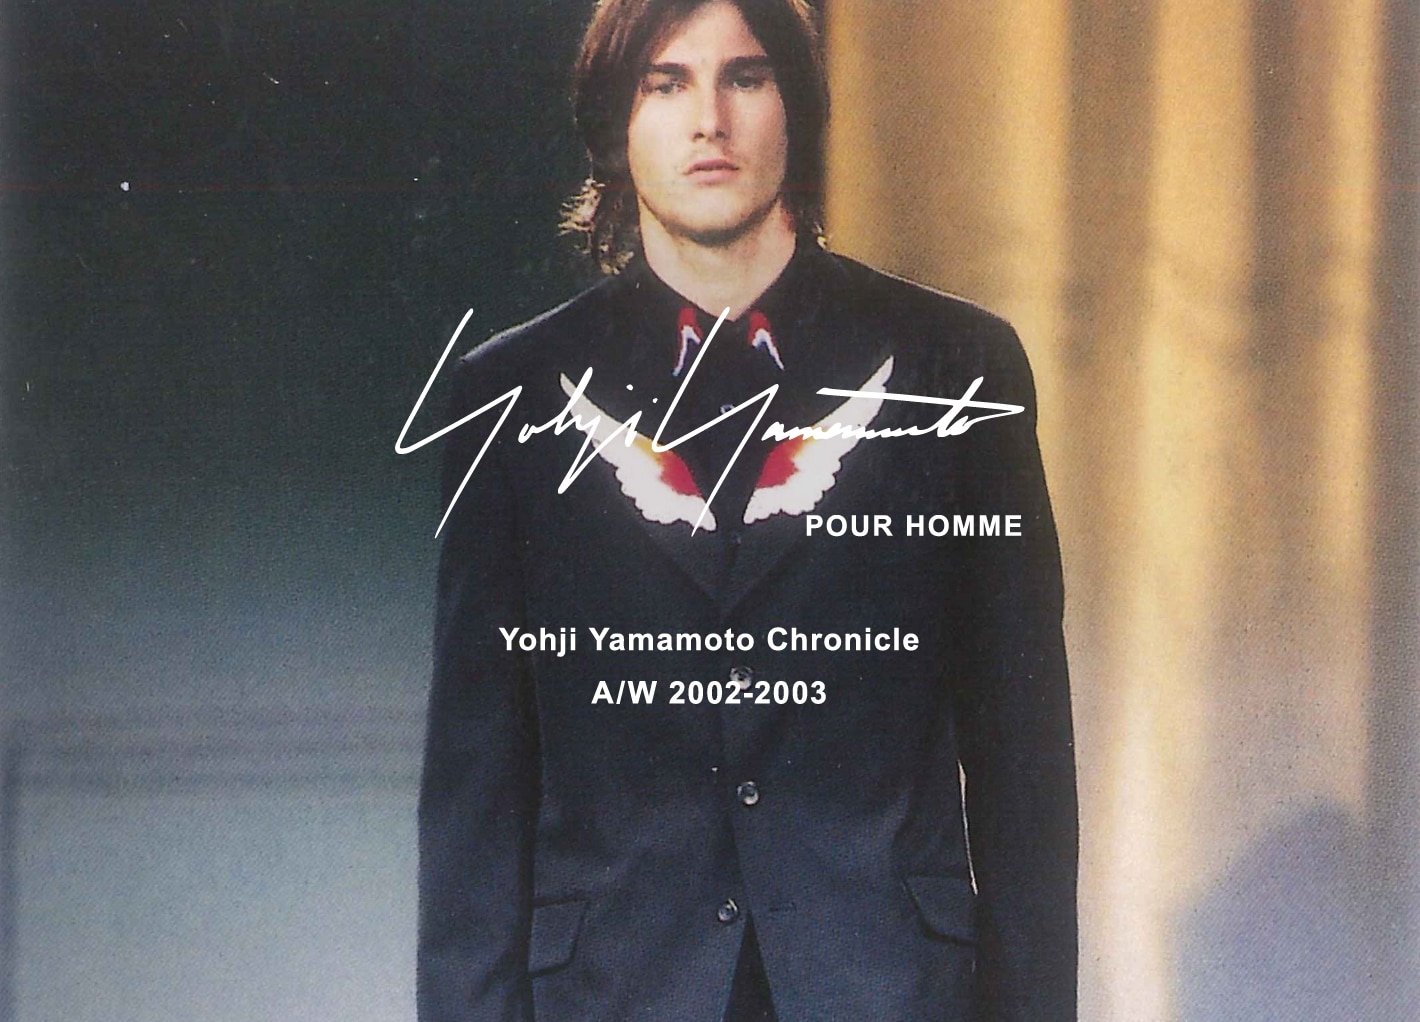 Yohji Yamamoto Chronicle – POUR HOMME A/W 2002-2003